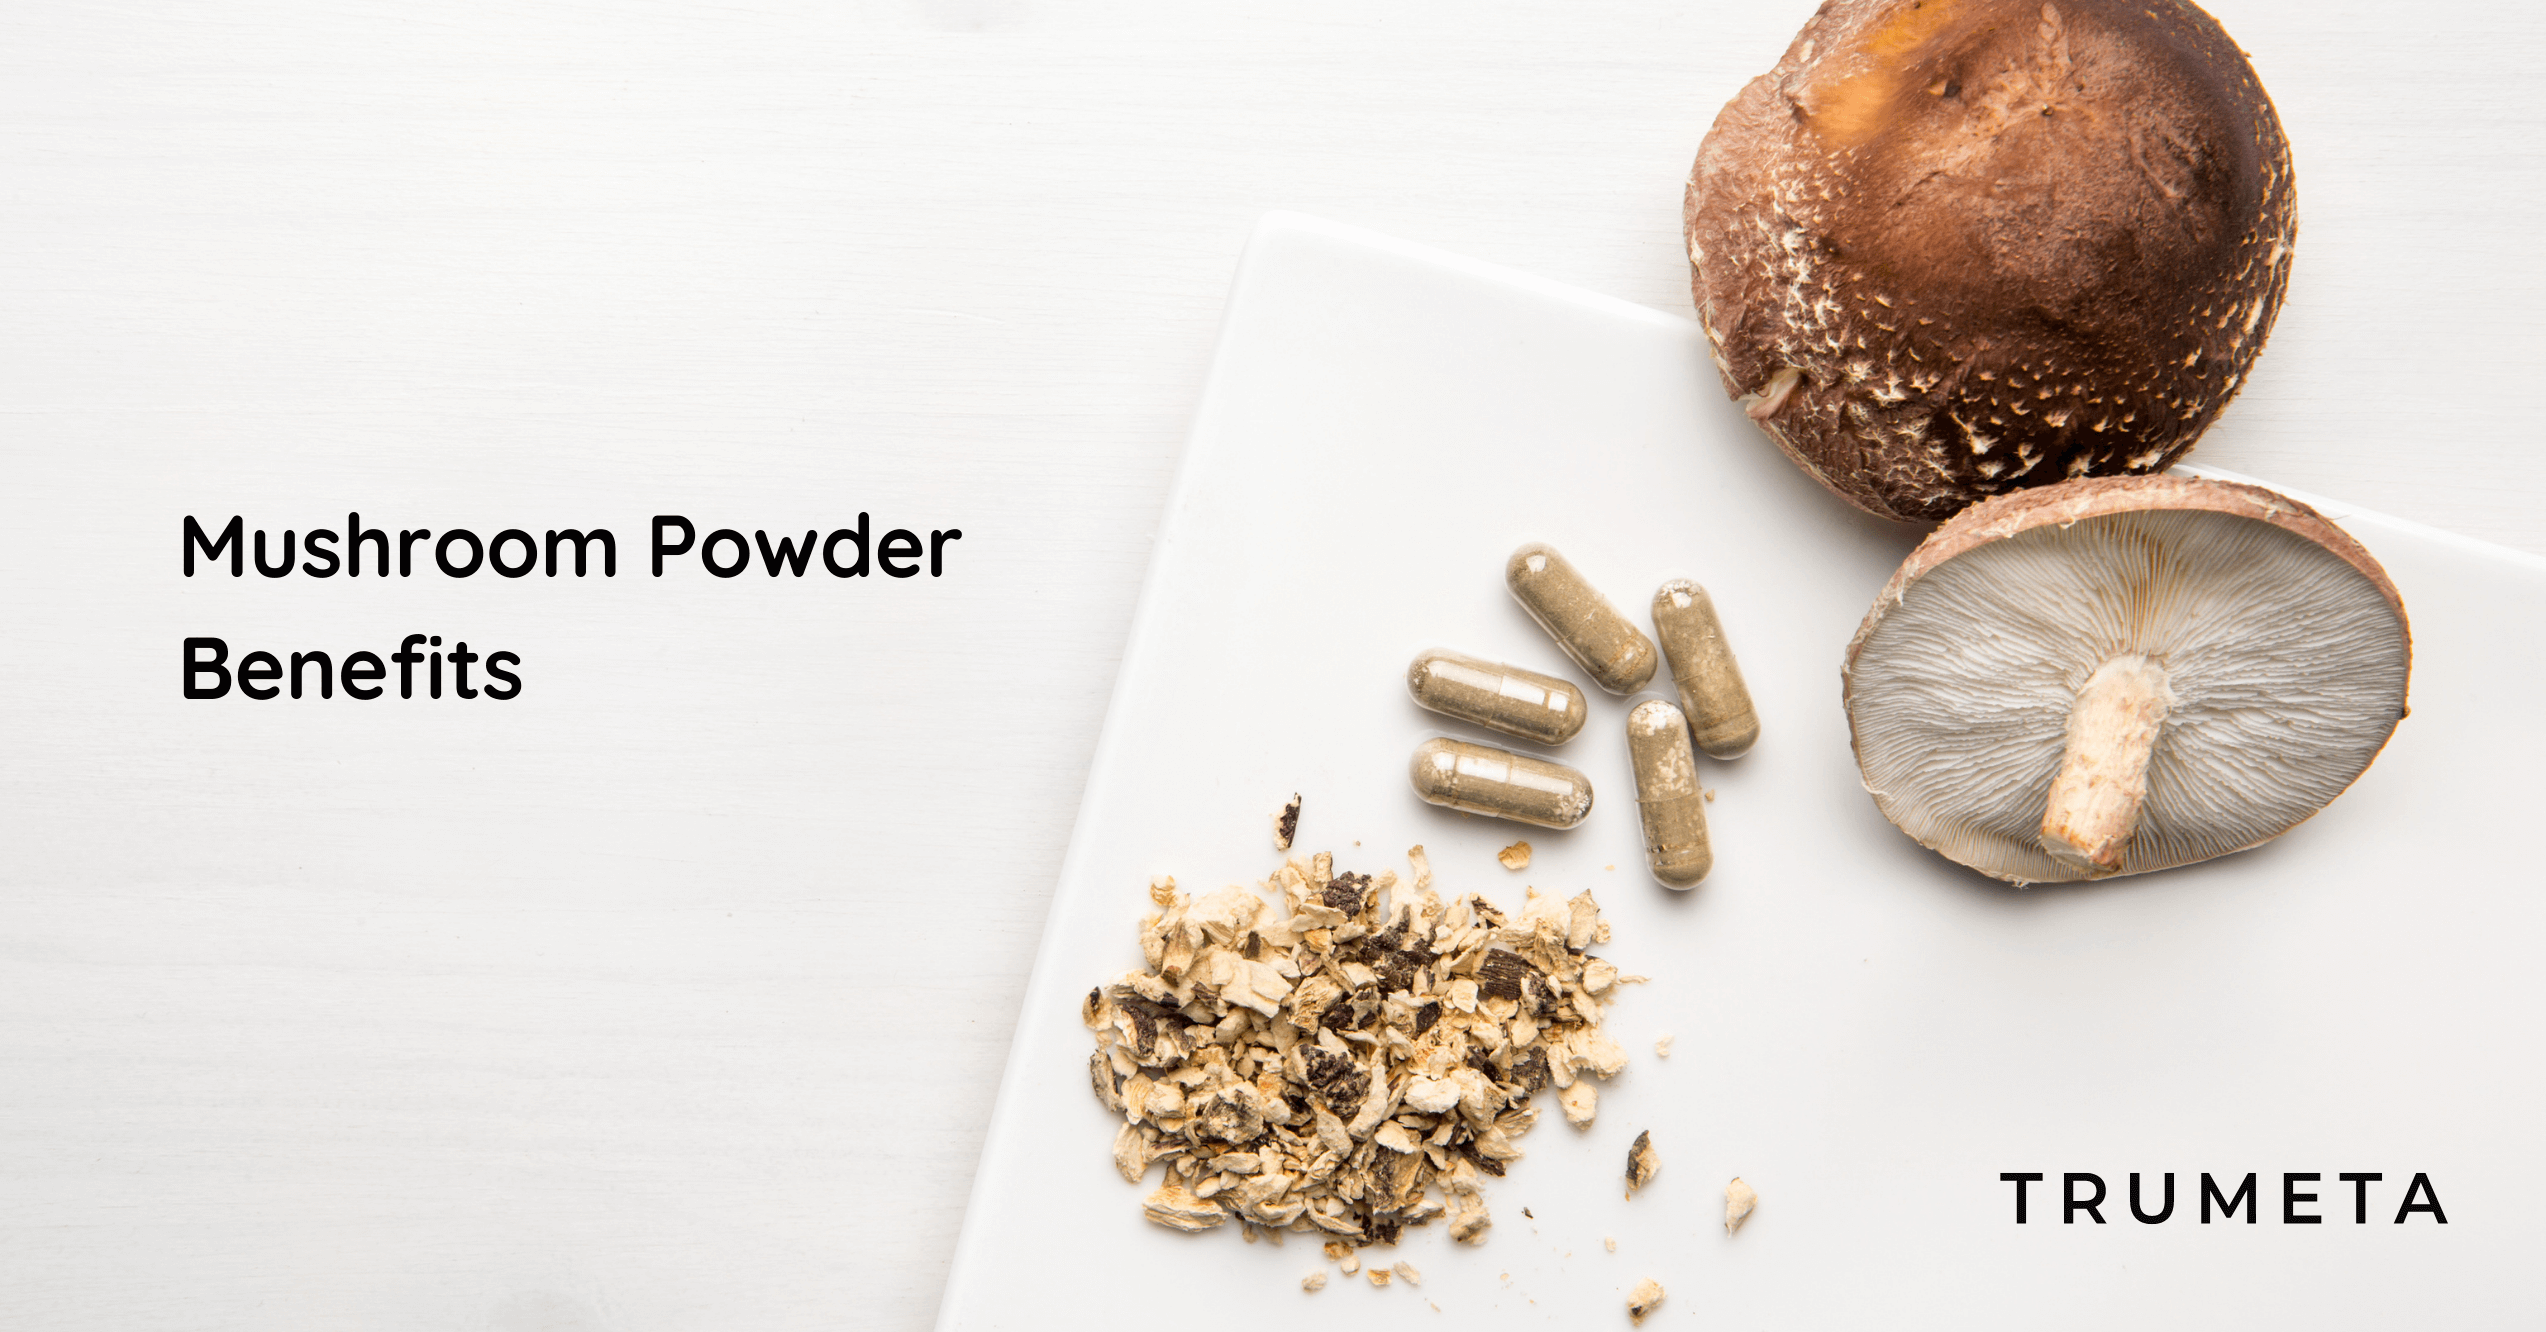 Mushroom Powder 
Benefit infographic